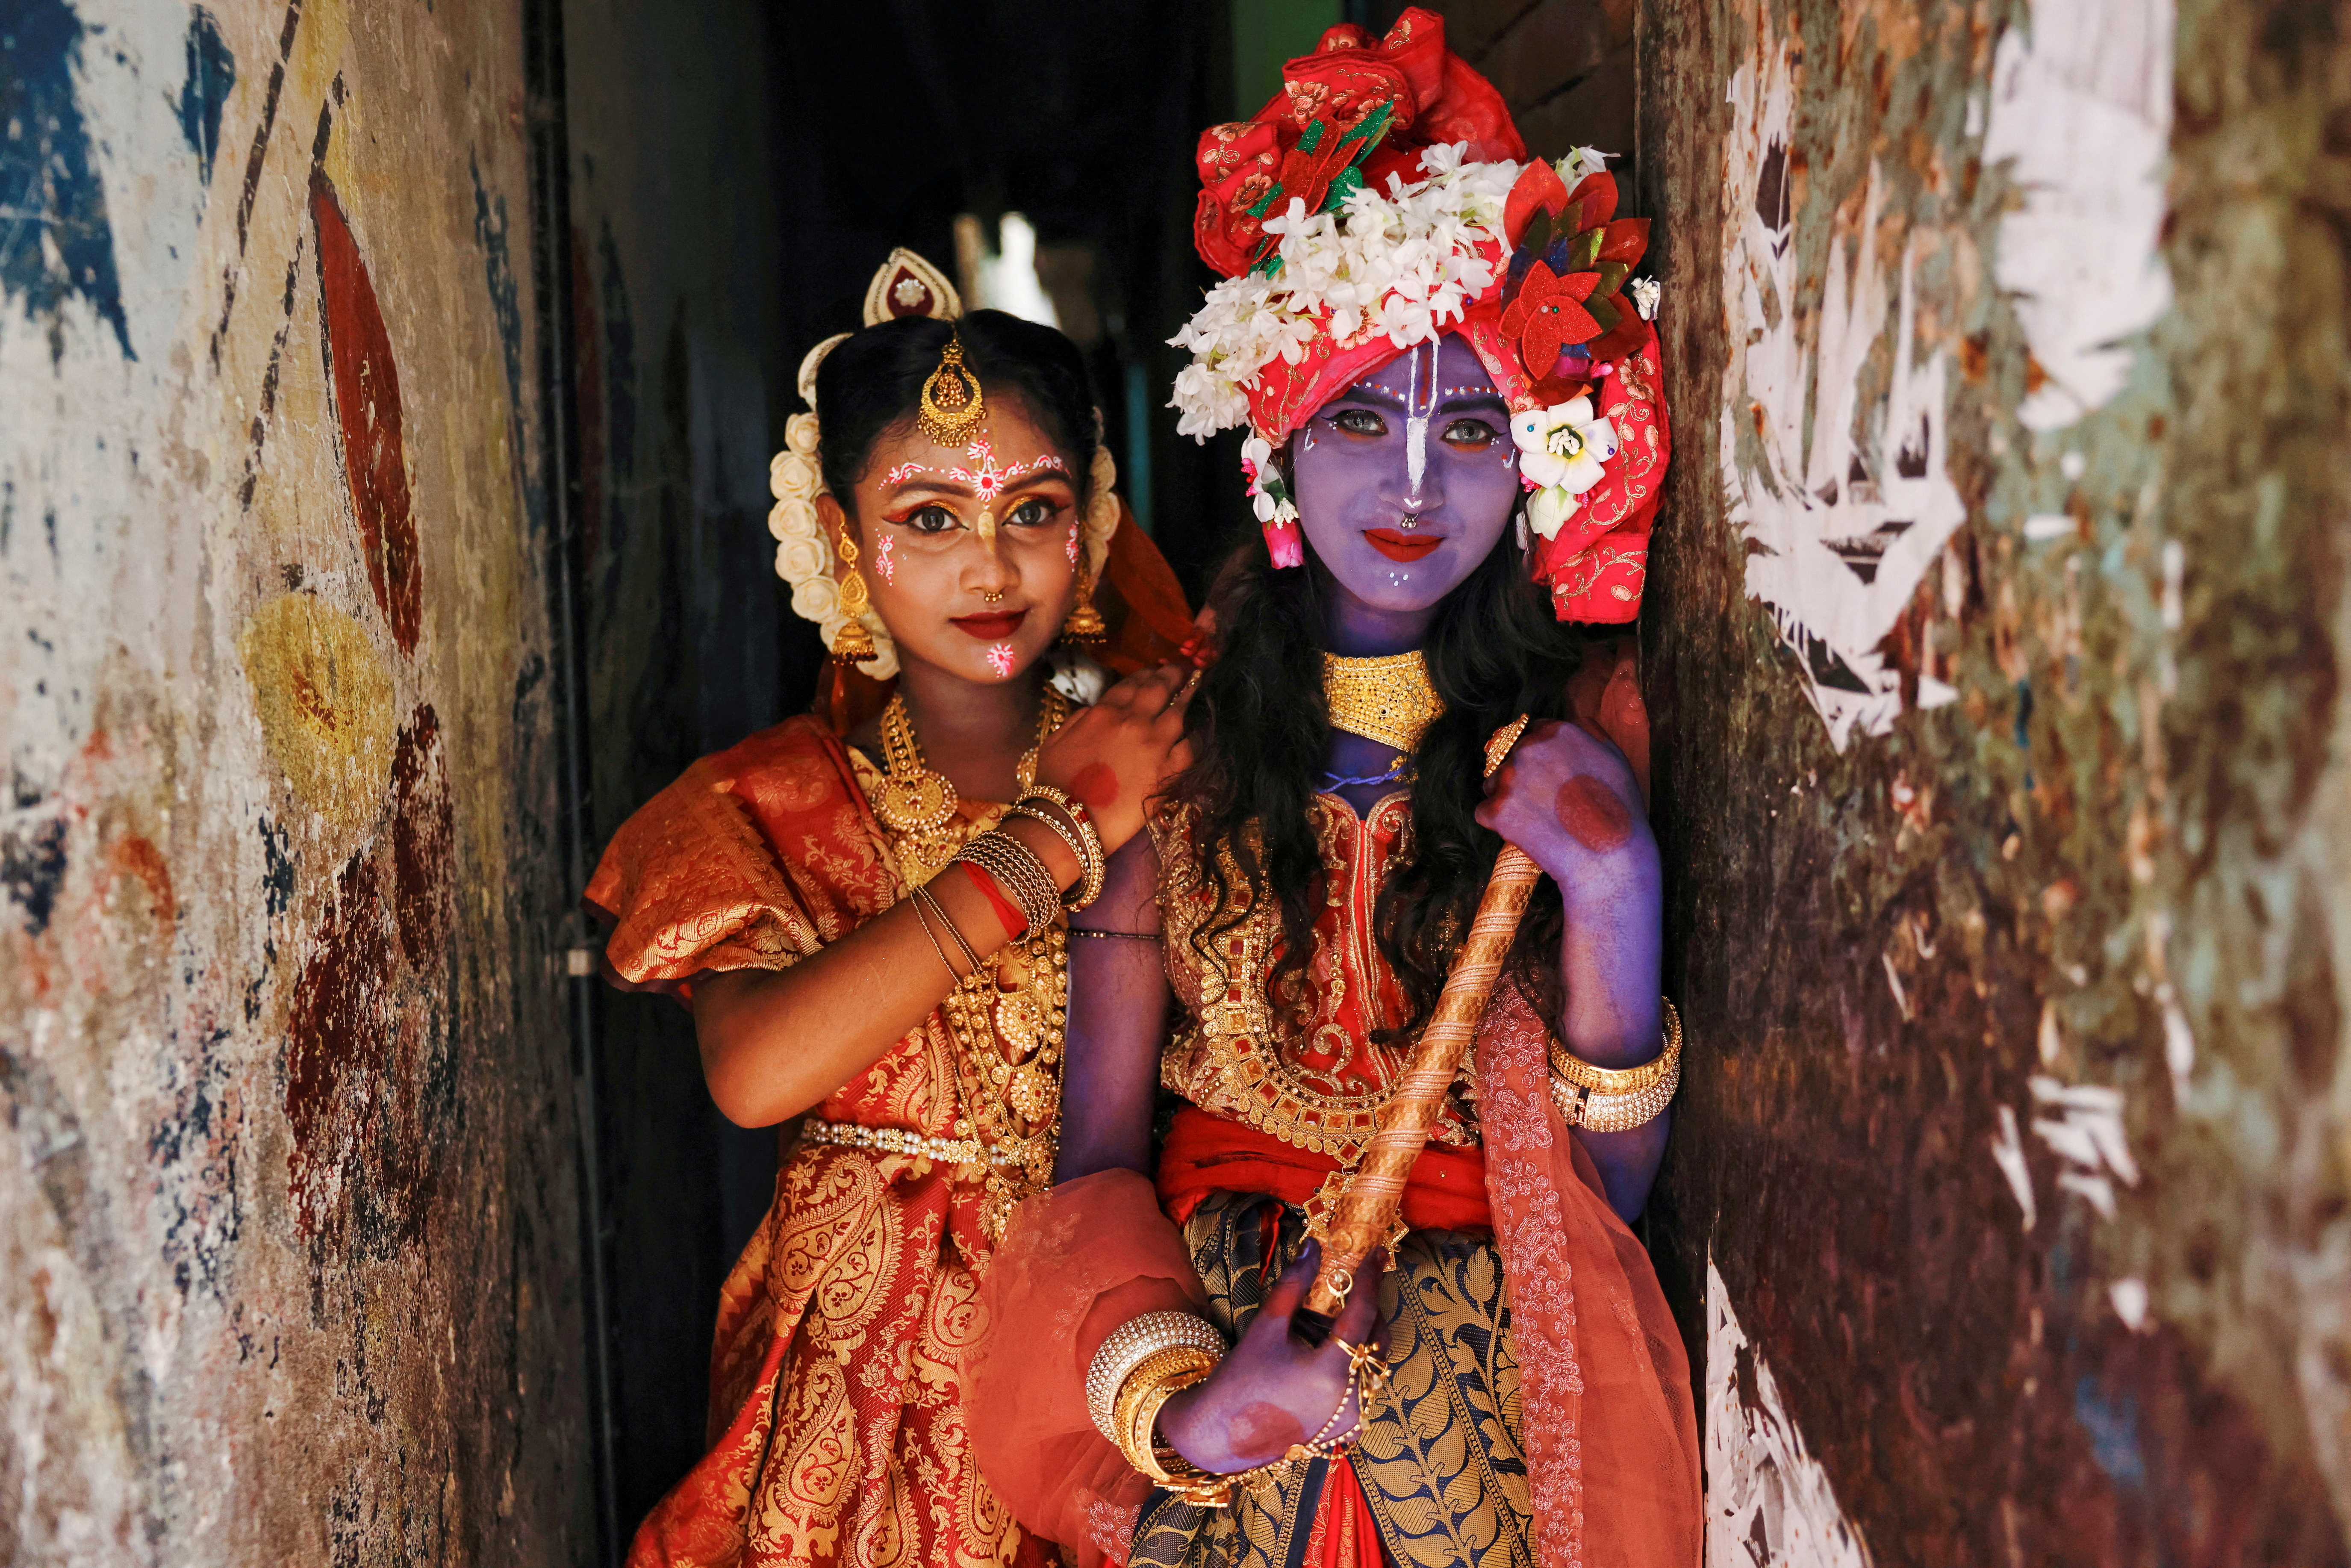 Hindu girls dress up as Radha and Lord Krishna during the Janmashtami festival in Dhaka